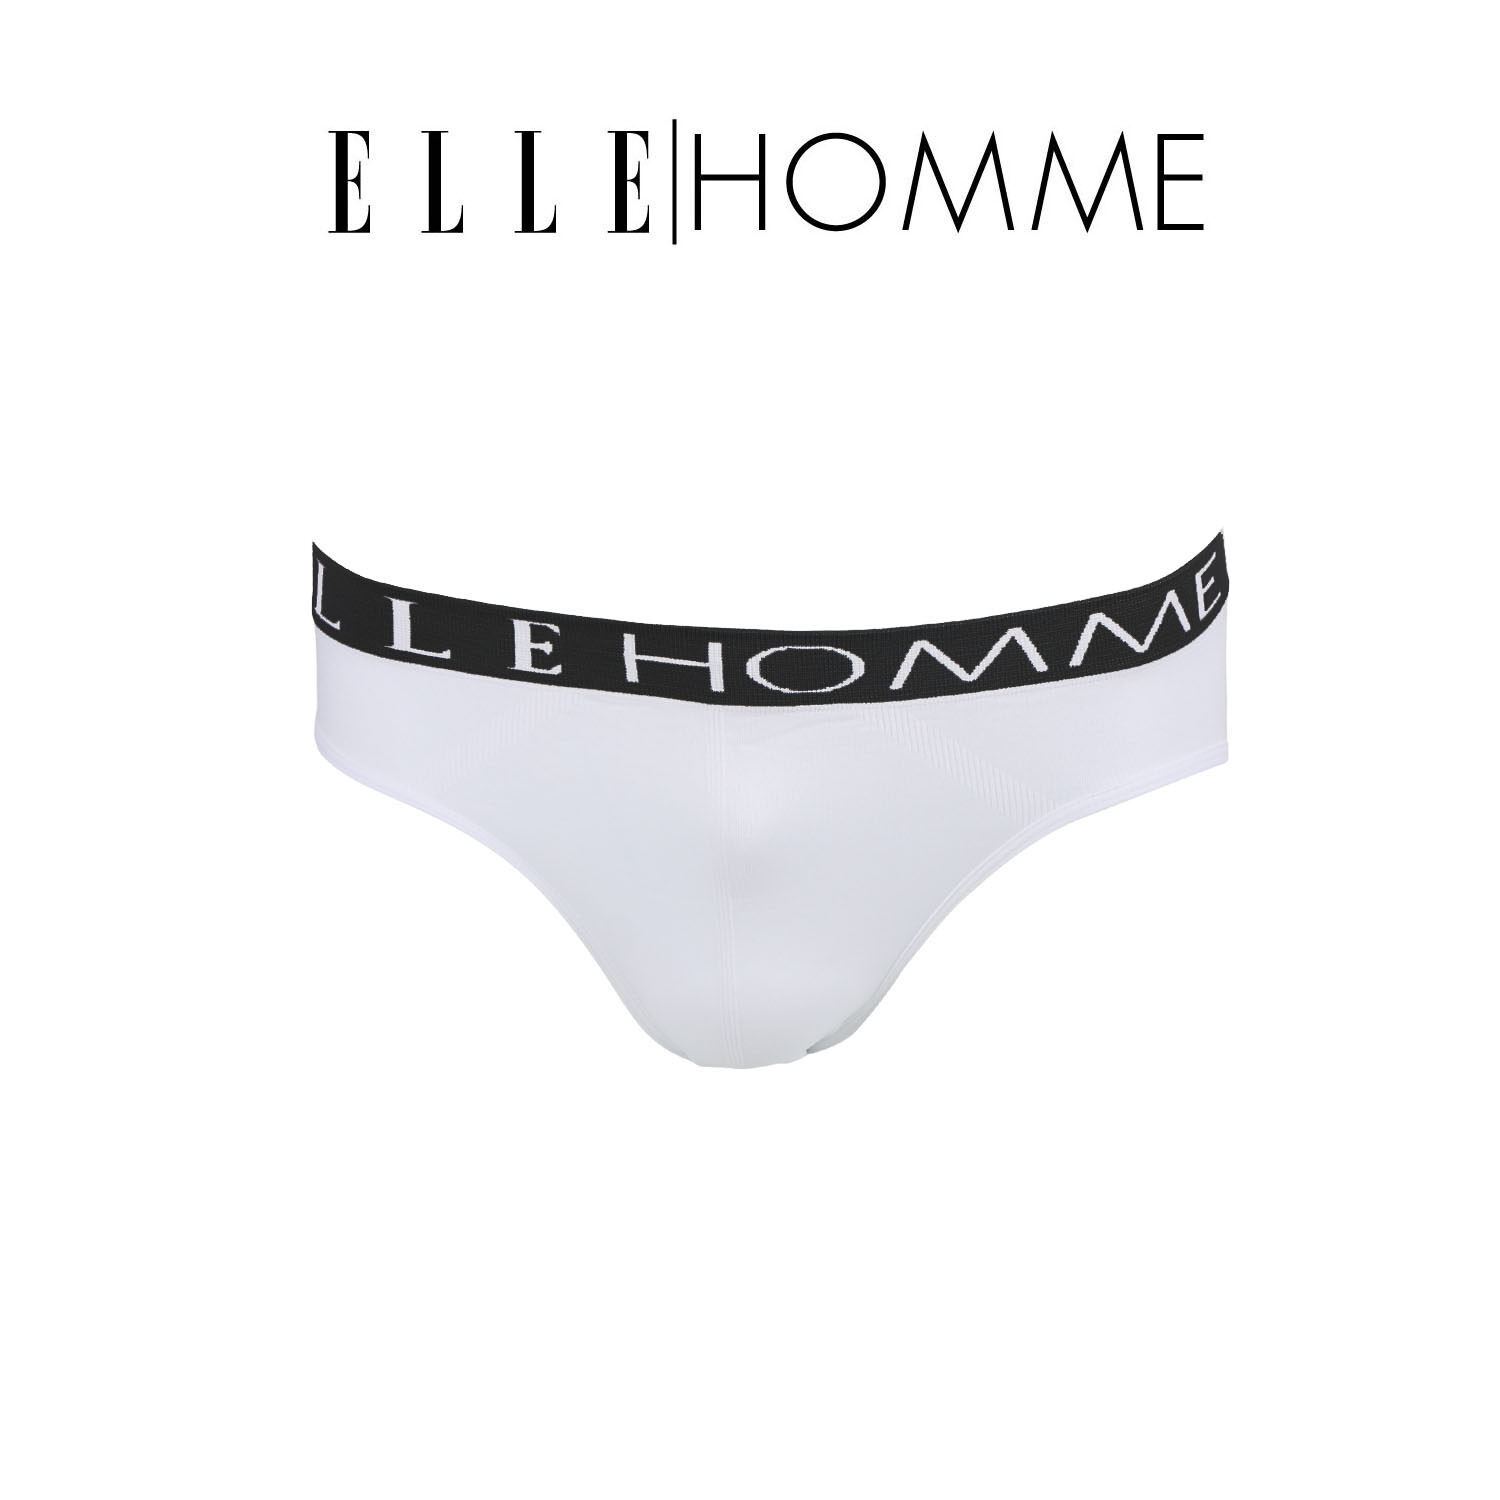 ELLE HOMME ชุดชั้นในชายรุ่นแฟชั่น ทรง Bikini แพค 1 ตัว (KUB9922)